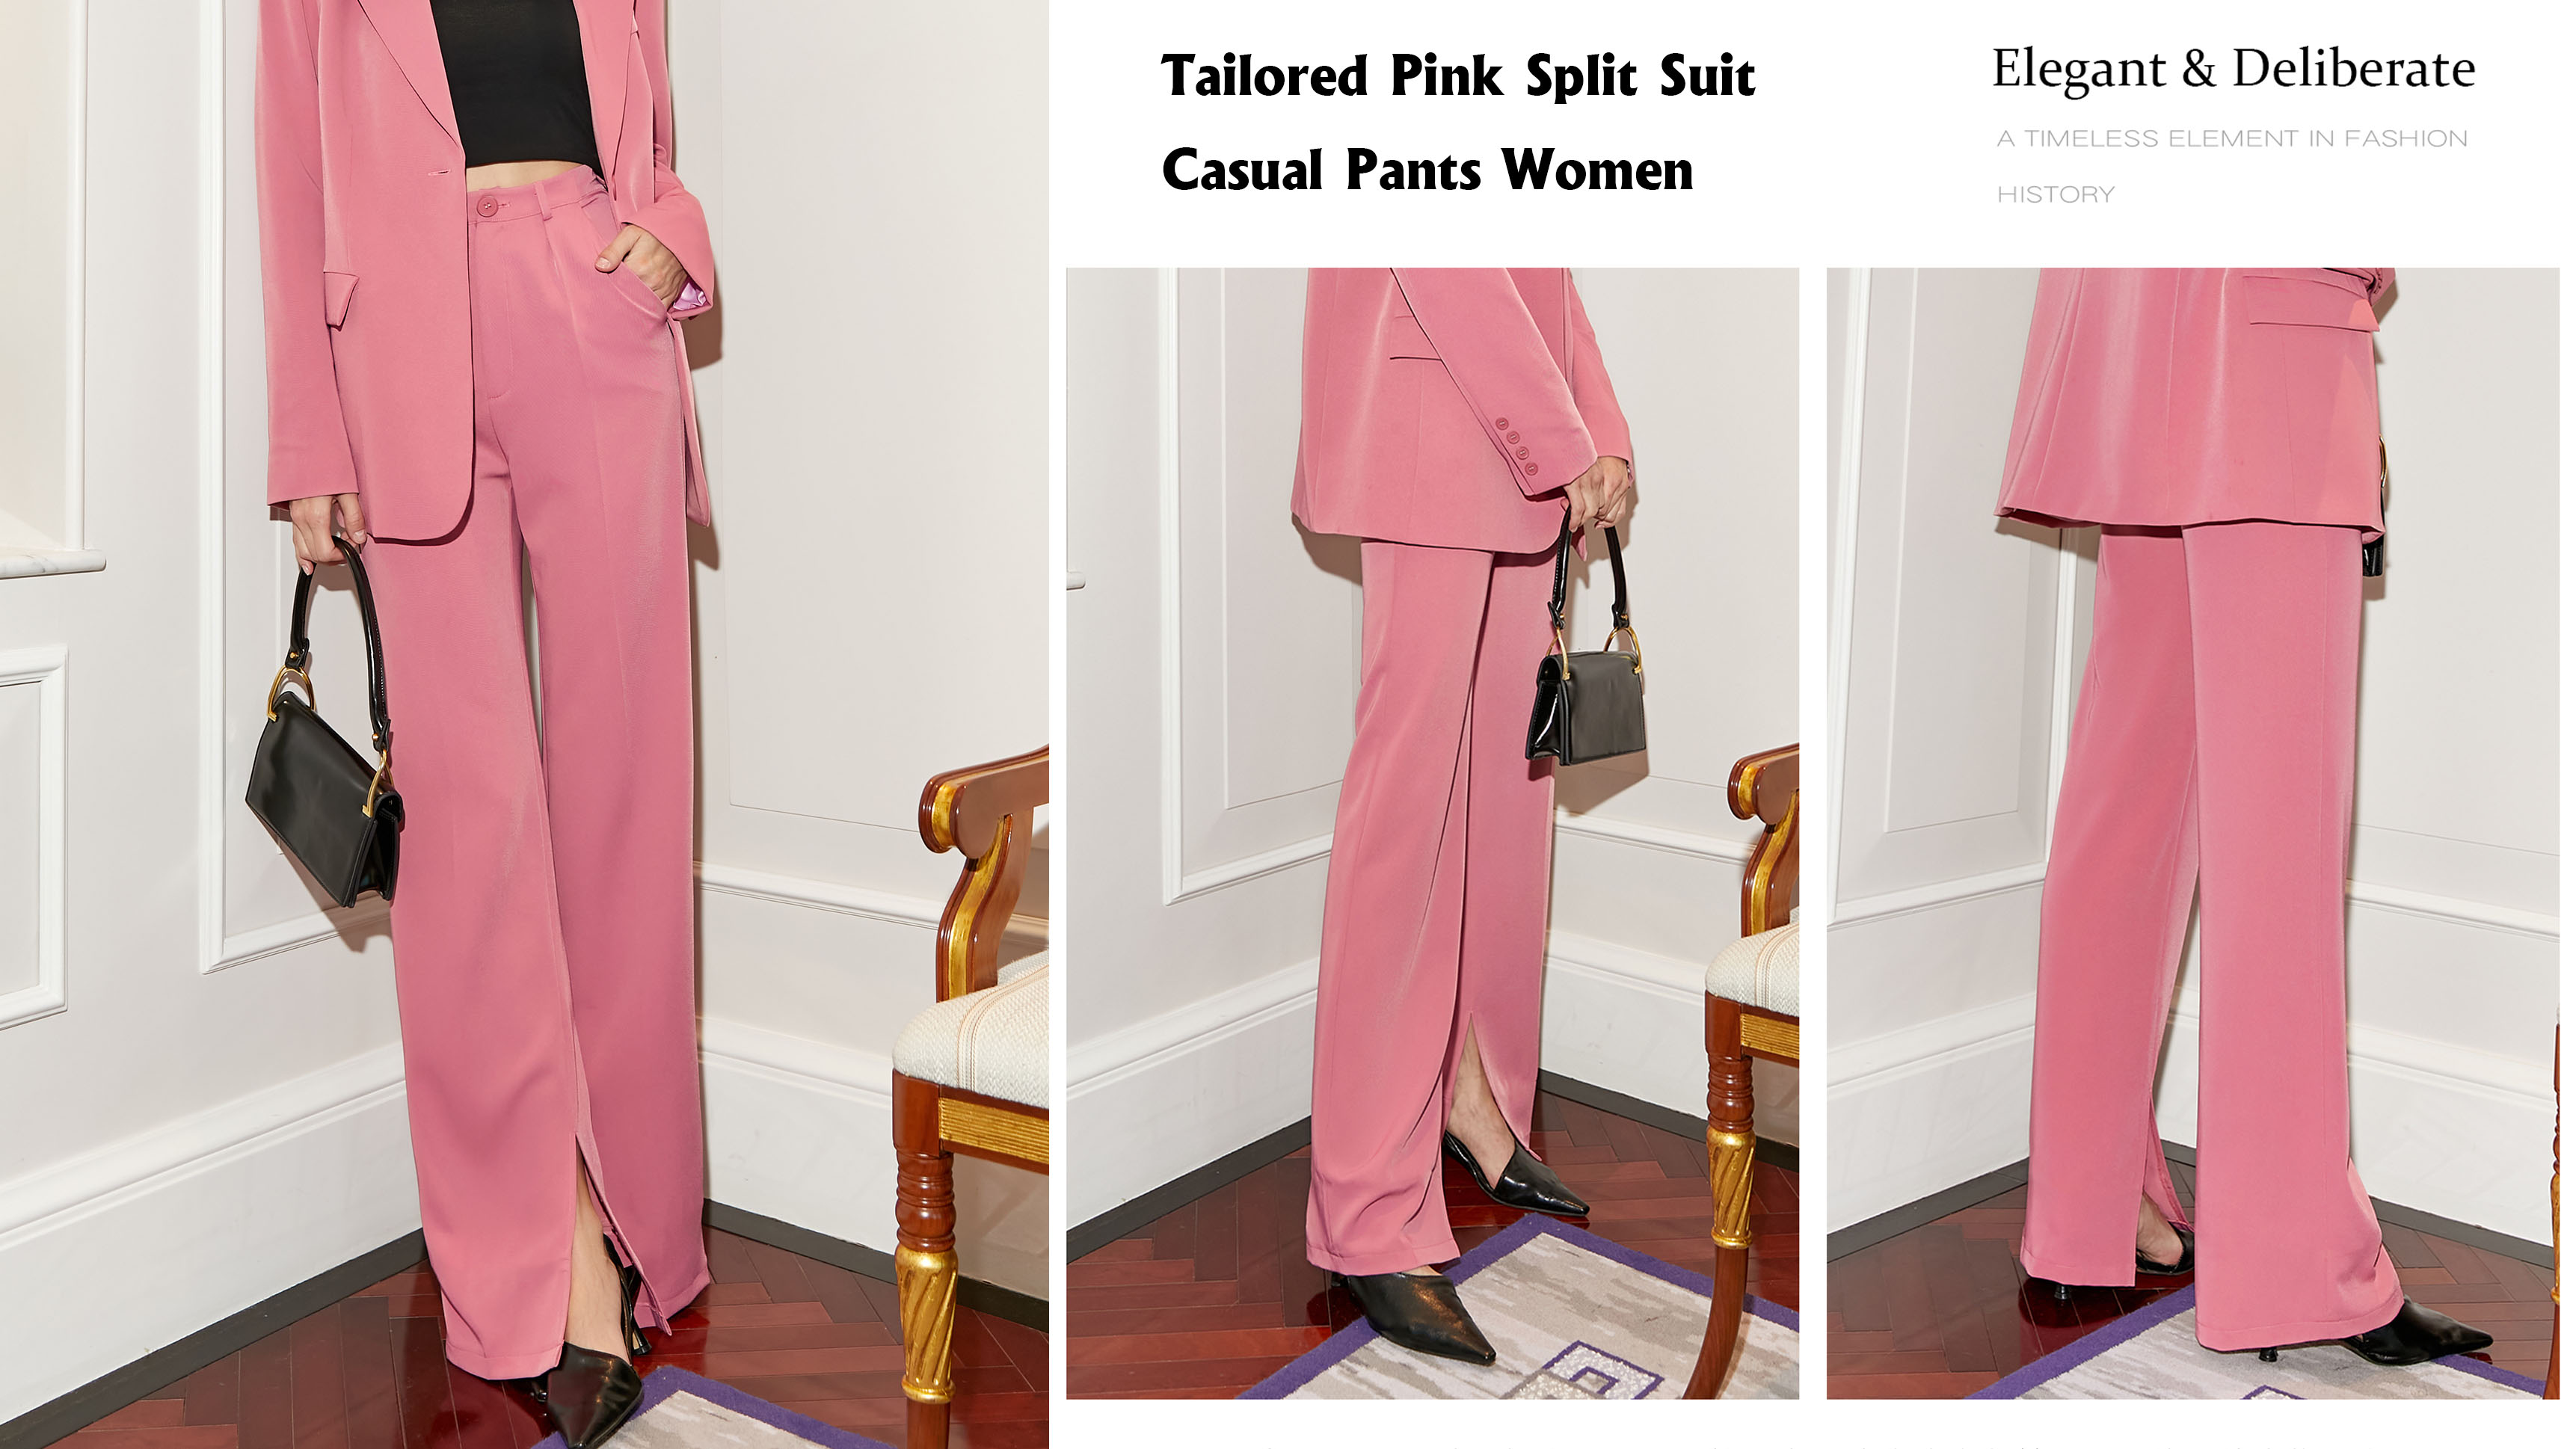 Tailored Pink Split Suit Casual Pants Women